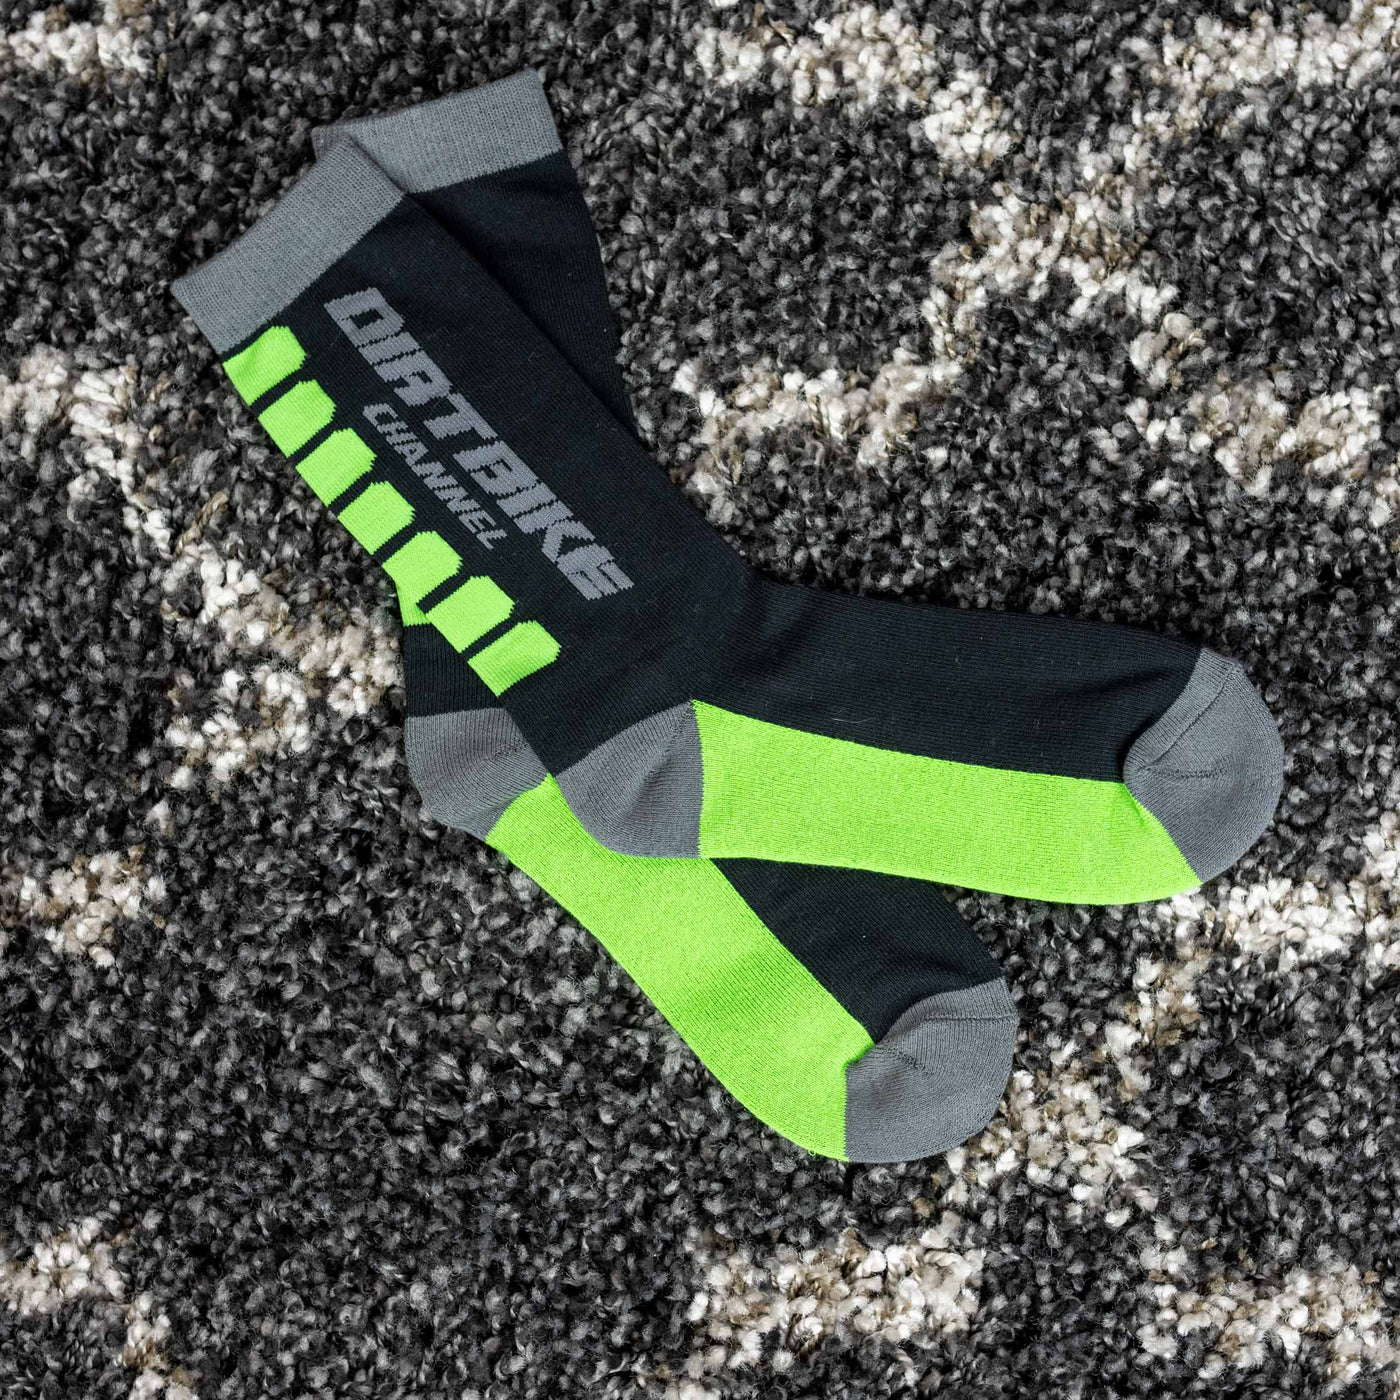 DBC Crew Socks (Black/Green) - 1 Pair